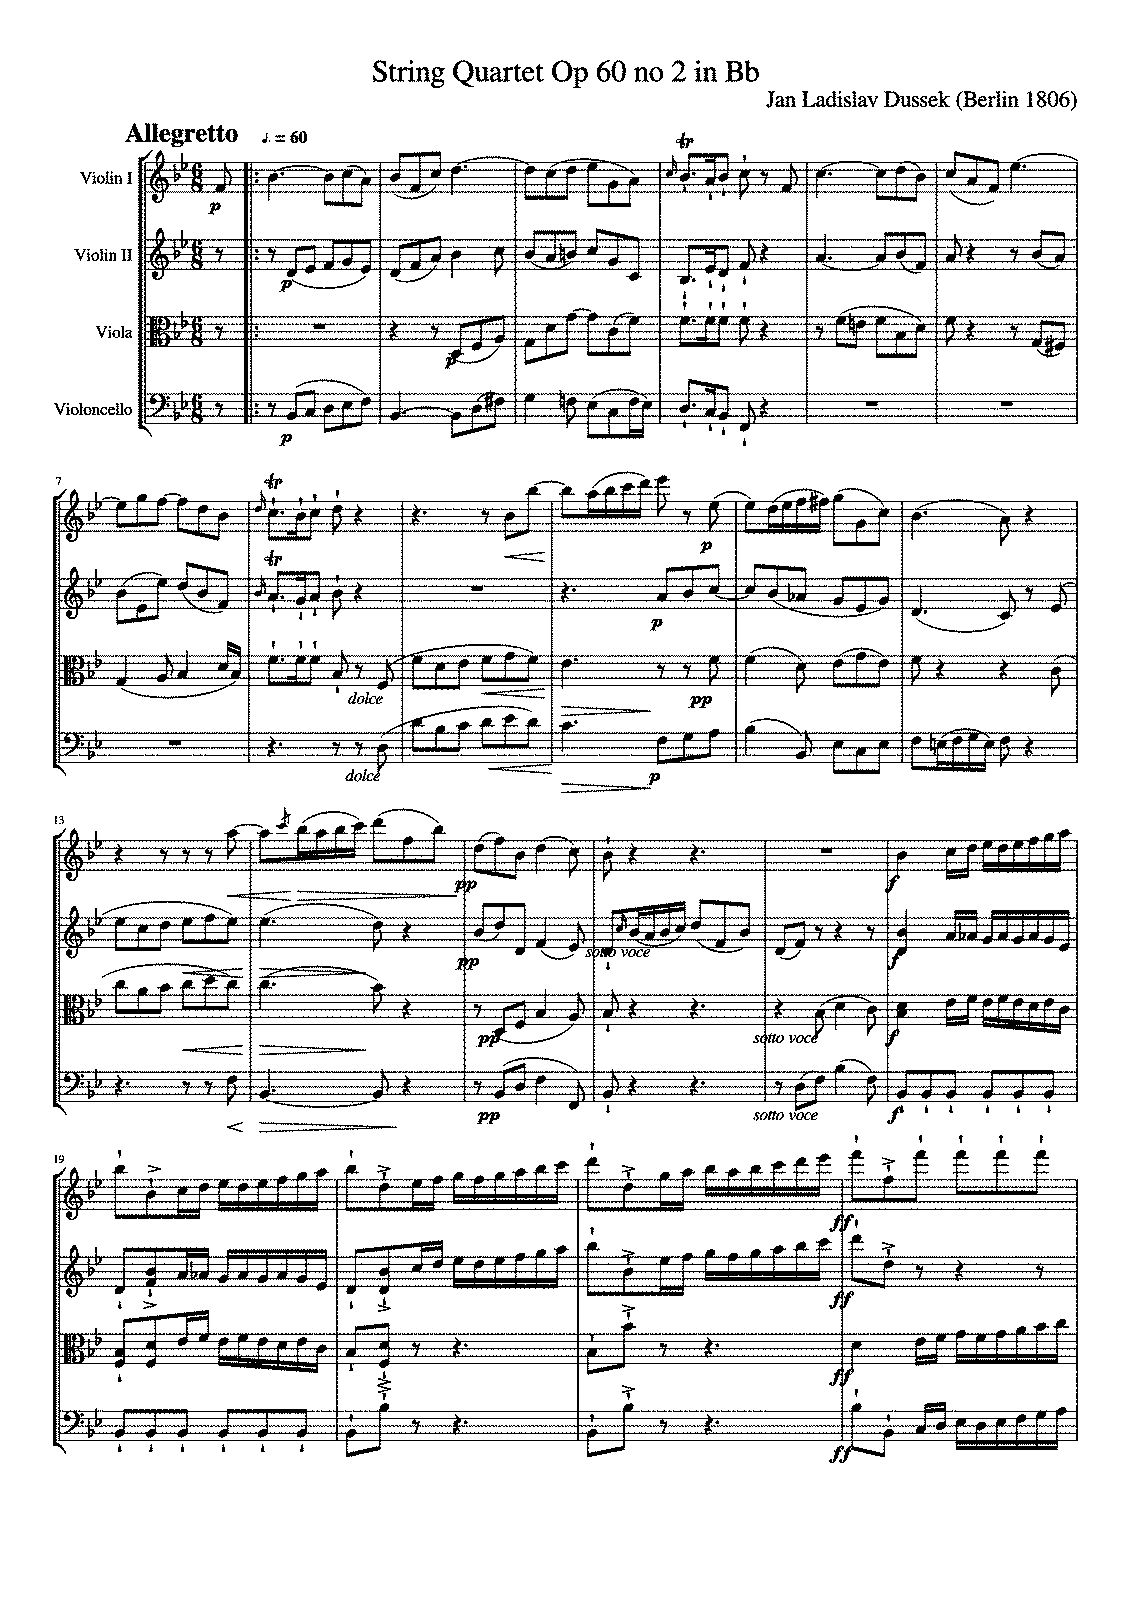 String Quartet in B-flat major, C.209 (Dussek, Jan Ladislav) - IMSLP